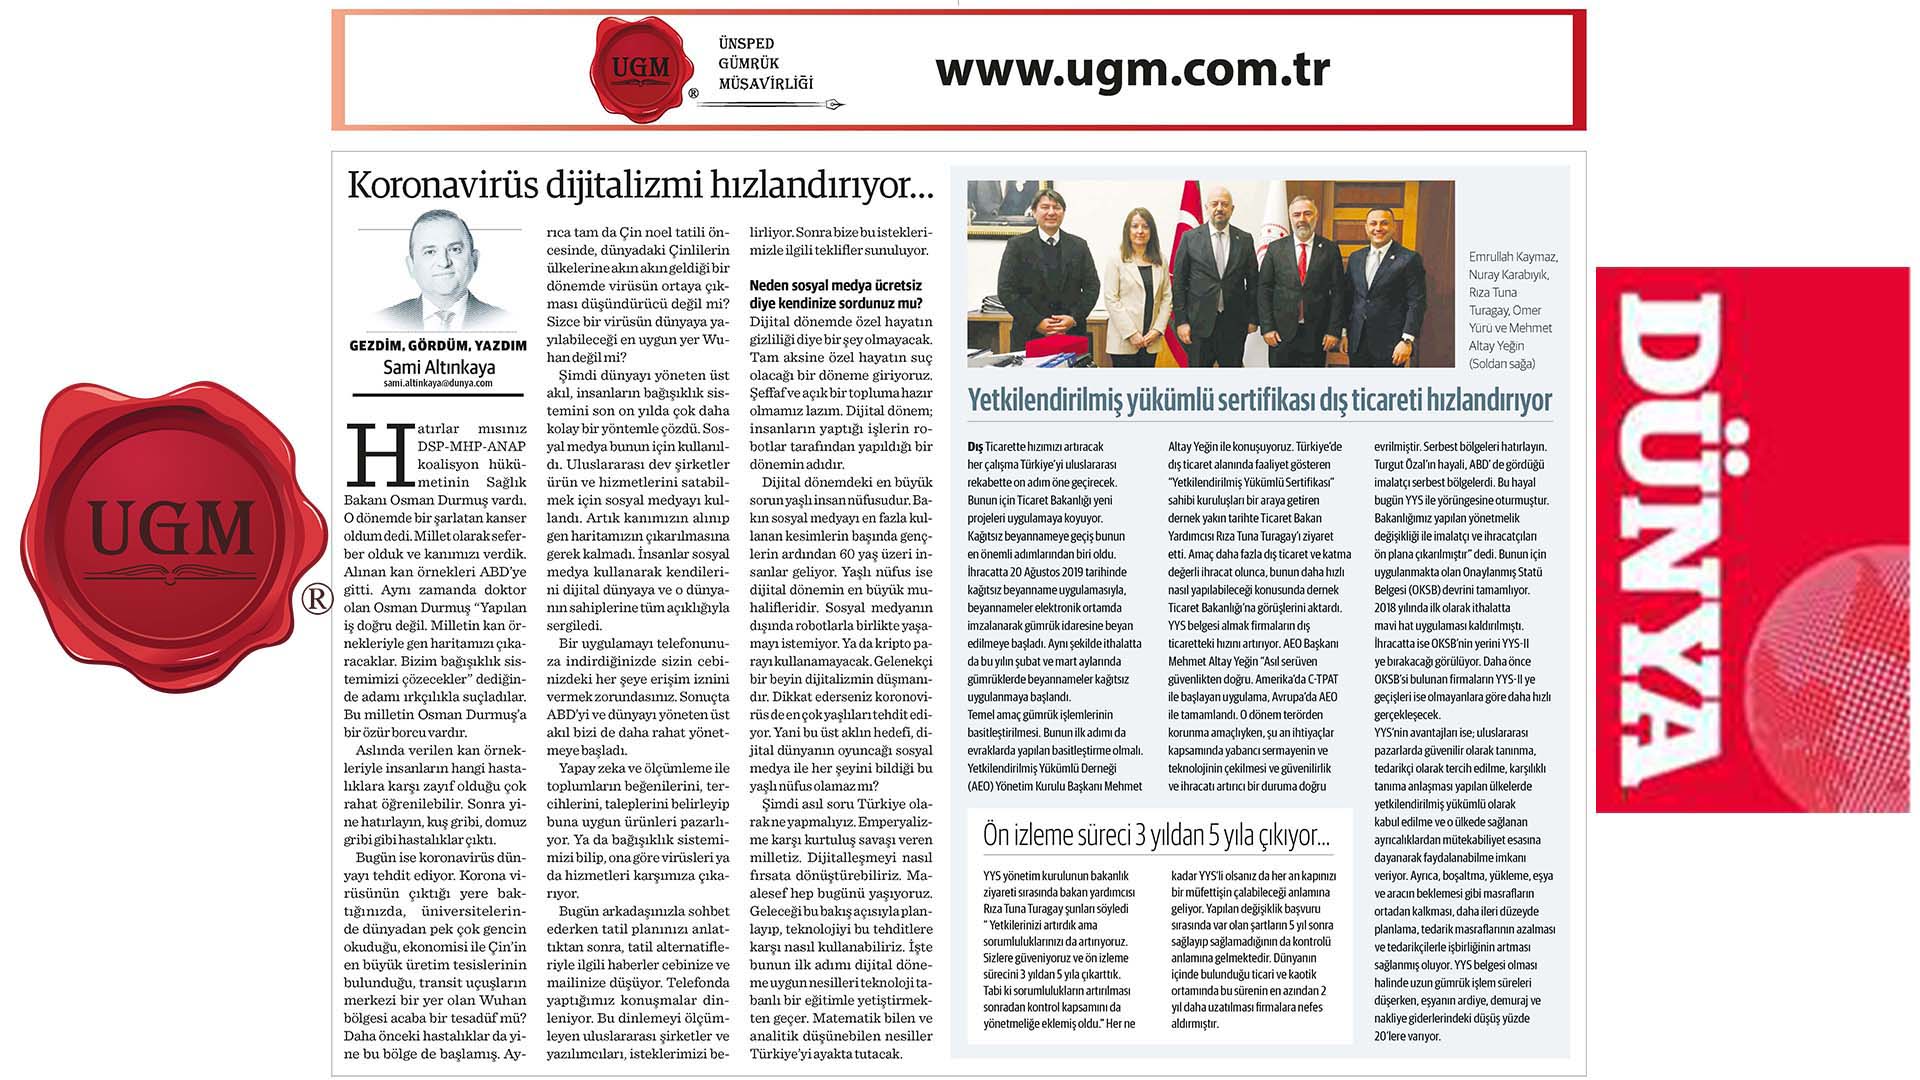 Our UGM Corporate Communications Director Mr. Sami Altınkaya's article titled "Coronavirus accelerates digitalism" was published in Dünya Newspaper on 16.03.2020.